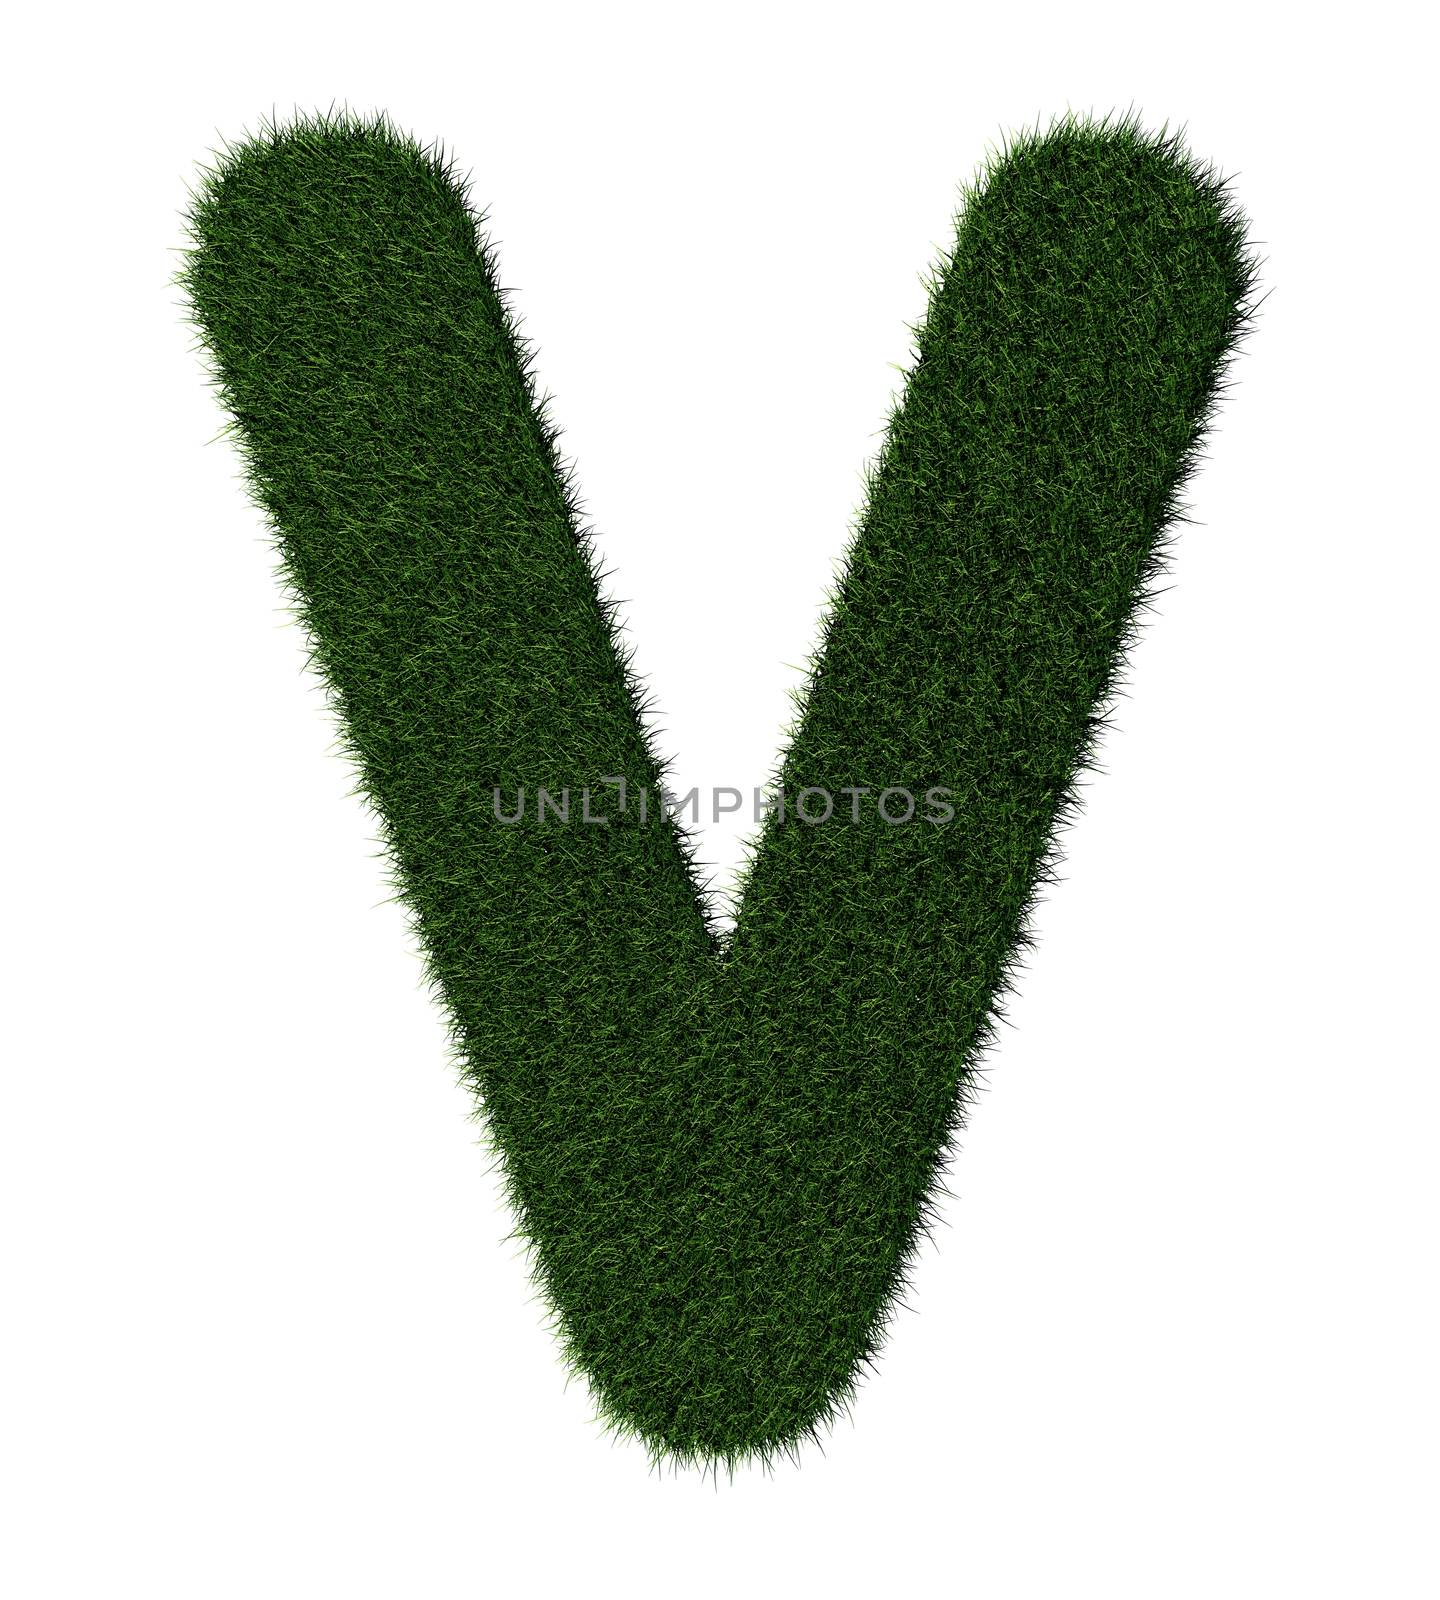 Grass alphabet - V by midani